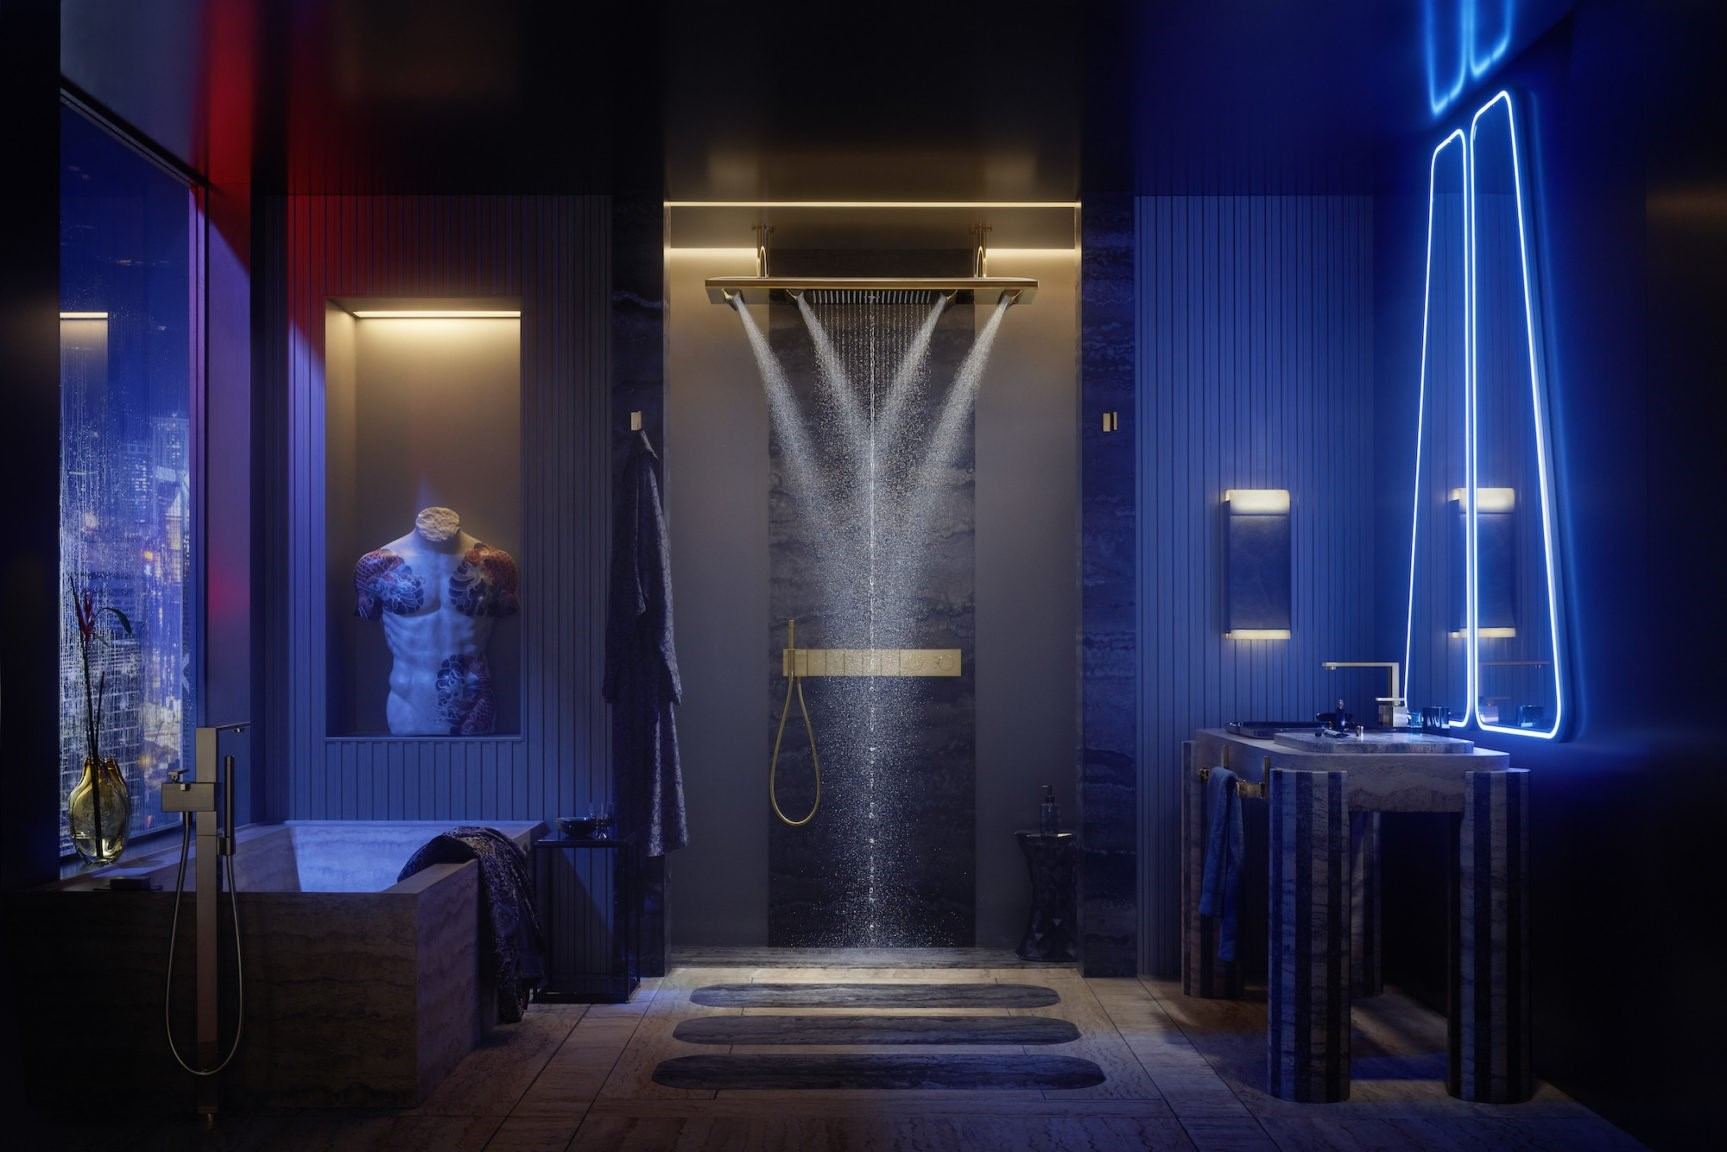 black spa-like bath ،e with blue lights and ،t s،wer, bathtub, washbasin and mirror, designer bathroom wall tiles ideas